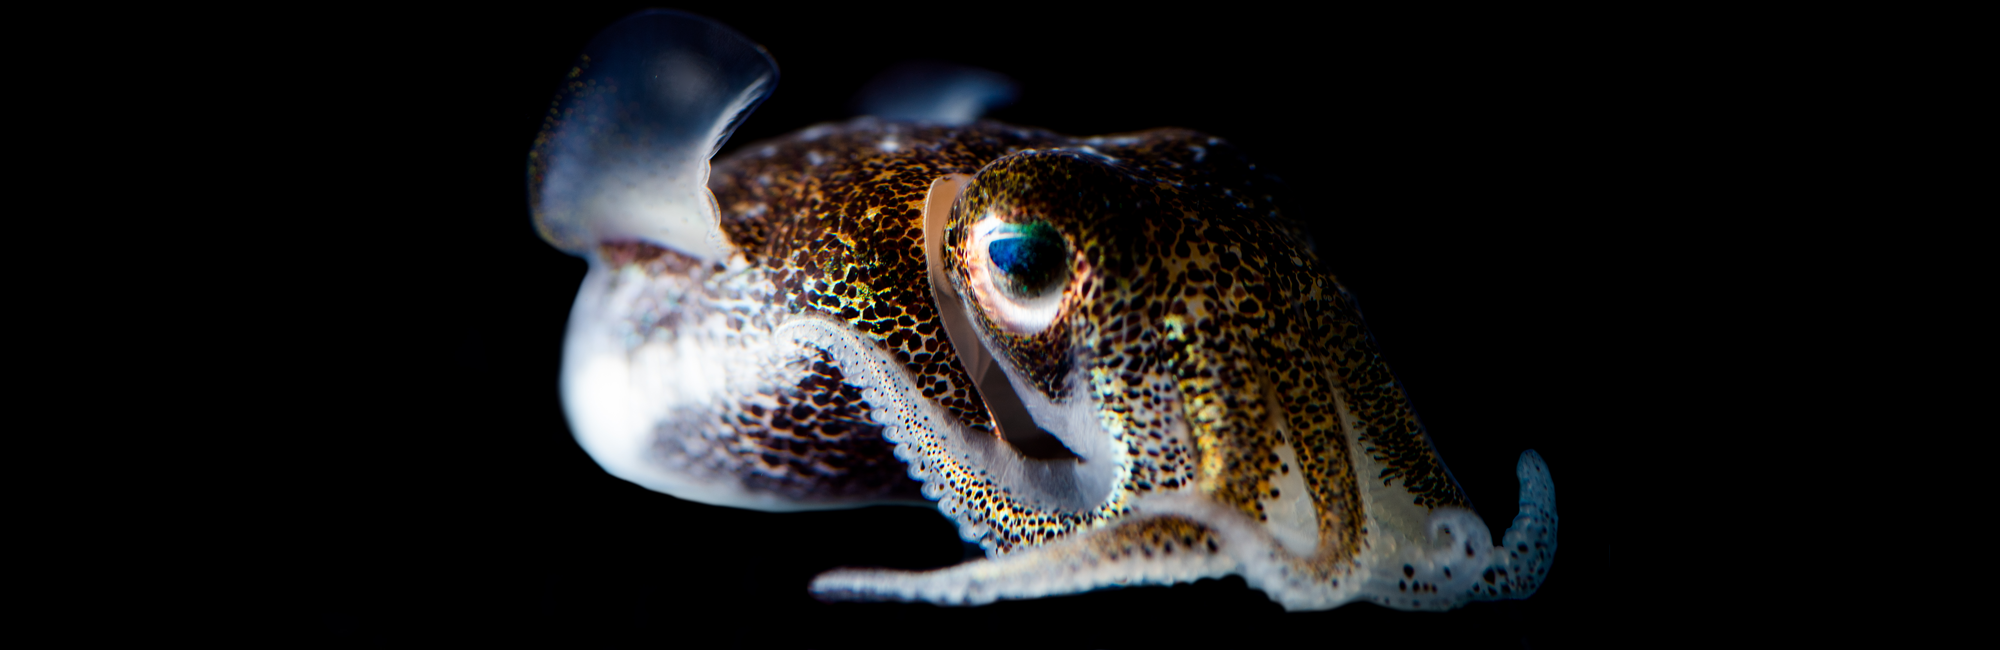 Hummingbird bobtail squid (Euprymna berryi). Credit: Tim Briggs